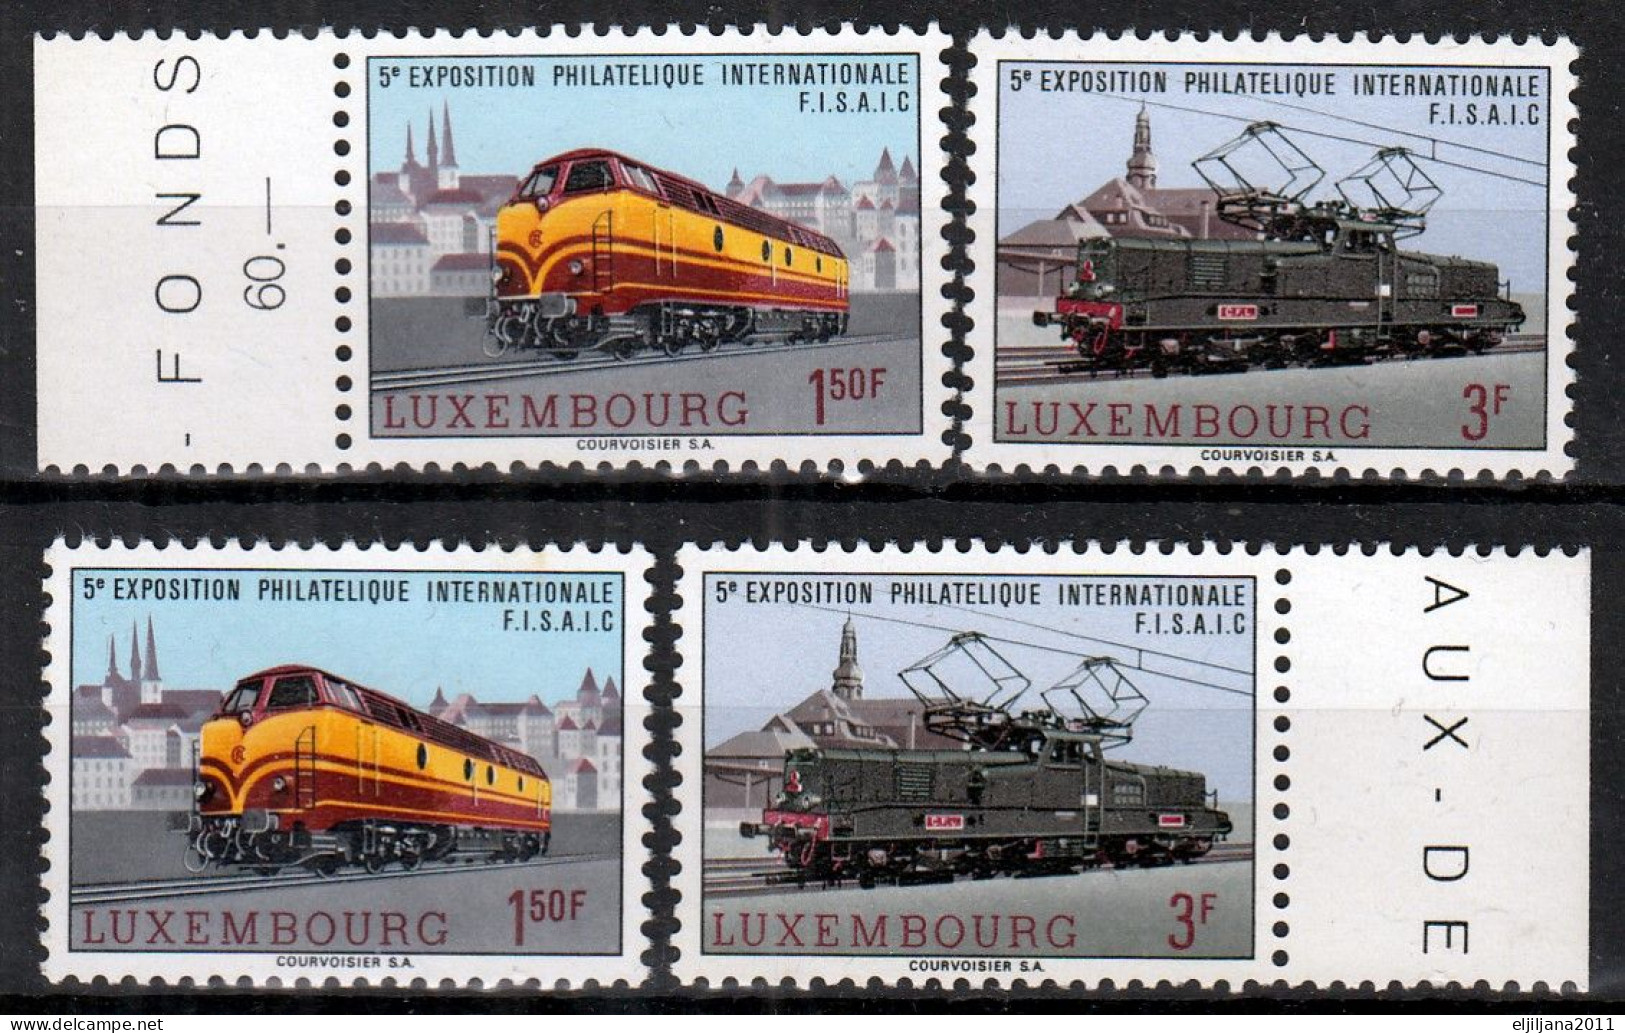 ⁕ LUXEMBOURG 1966 ⁕ Philatelic Exhibition FISAIC Railway Workers Philatelists Mi.735-736 X2⁕ 4v MNH - Nuevos